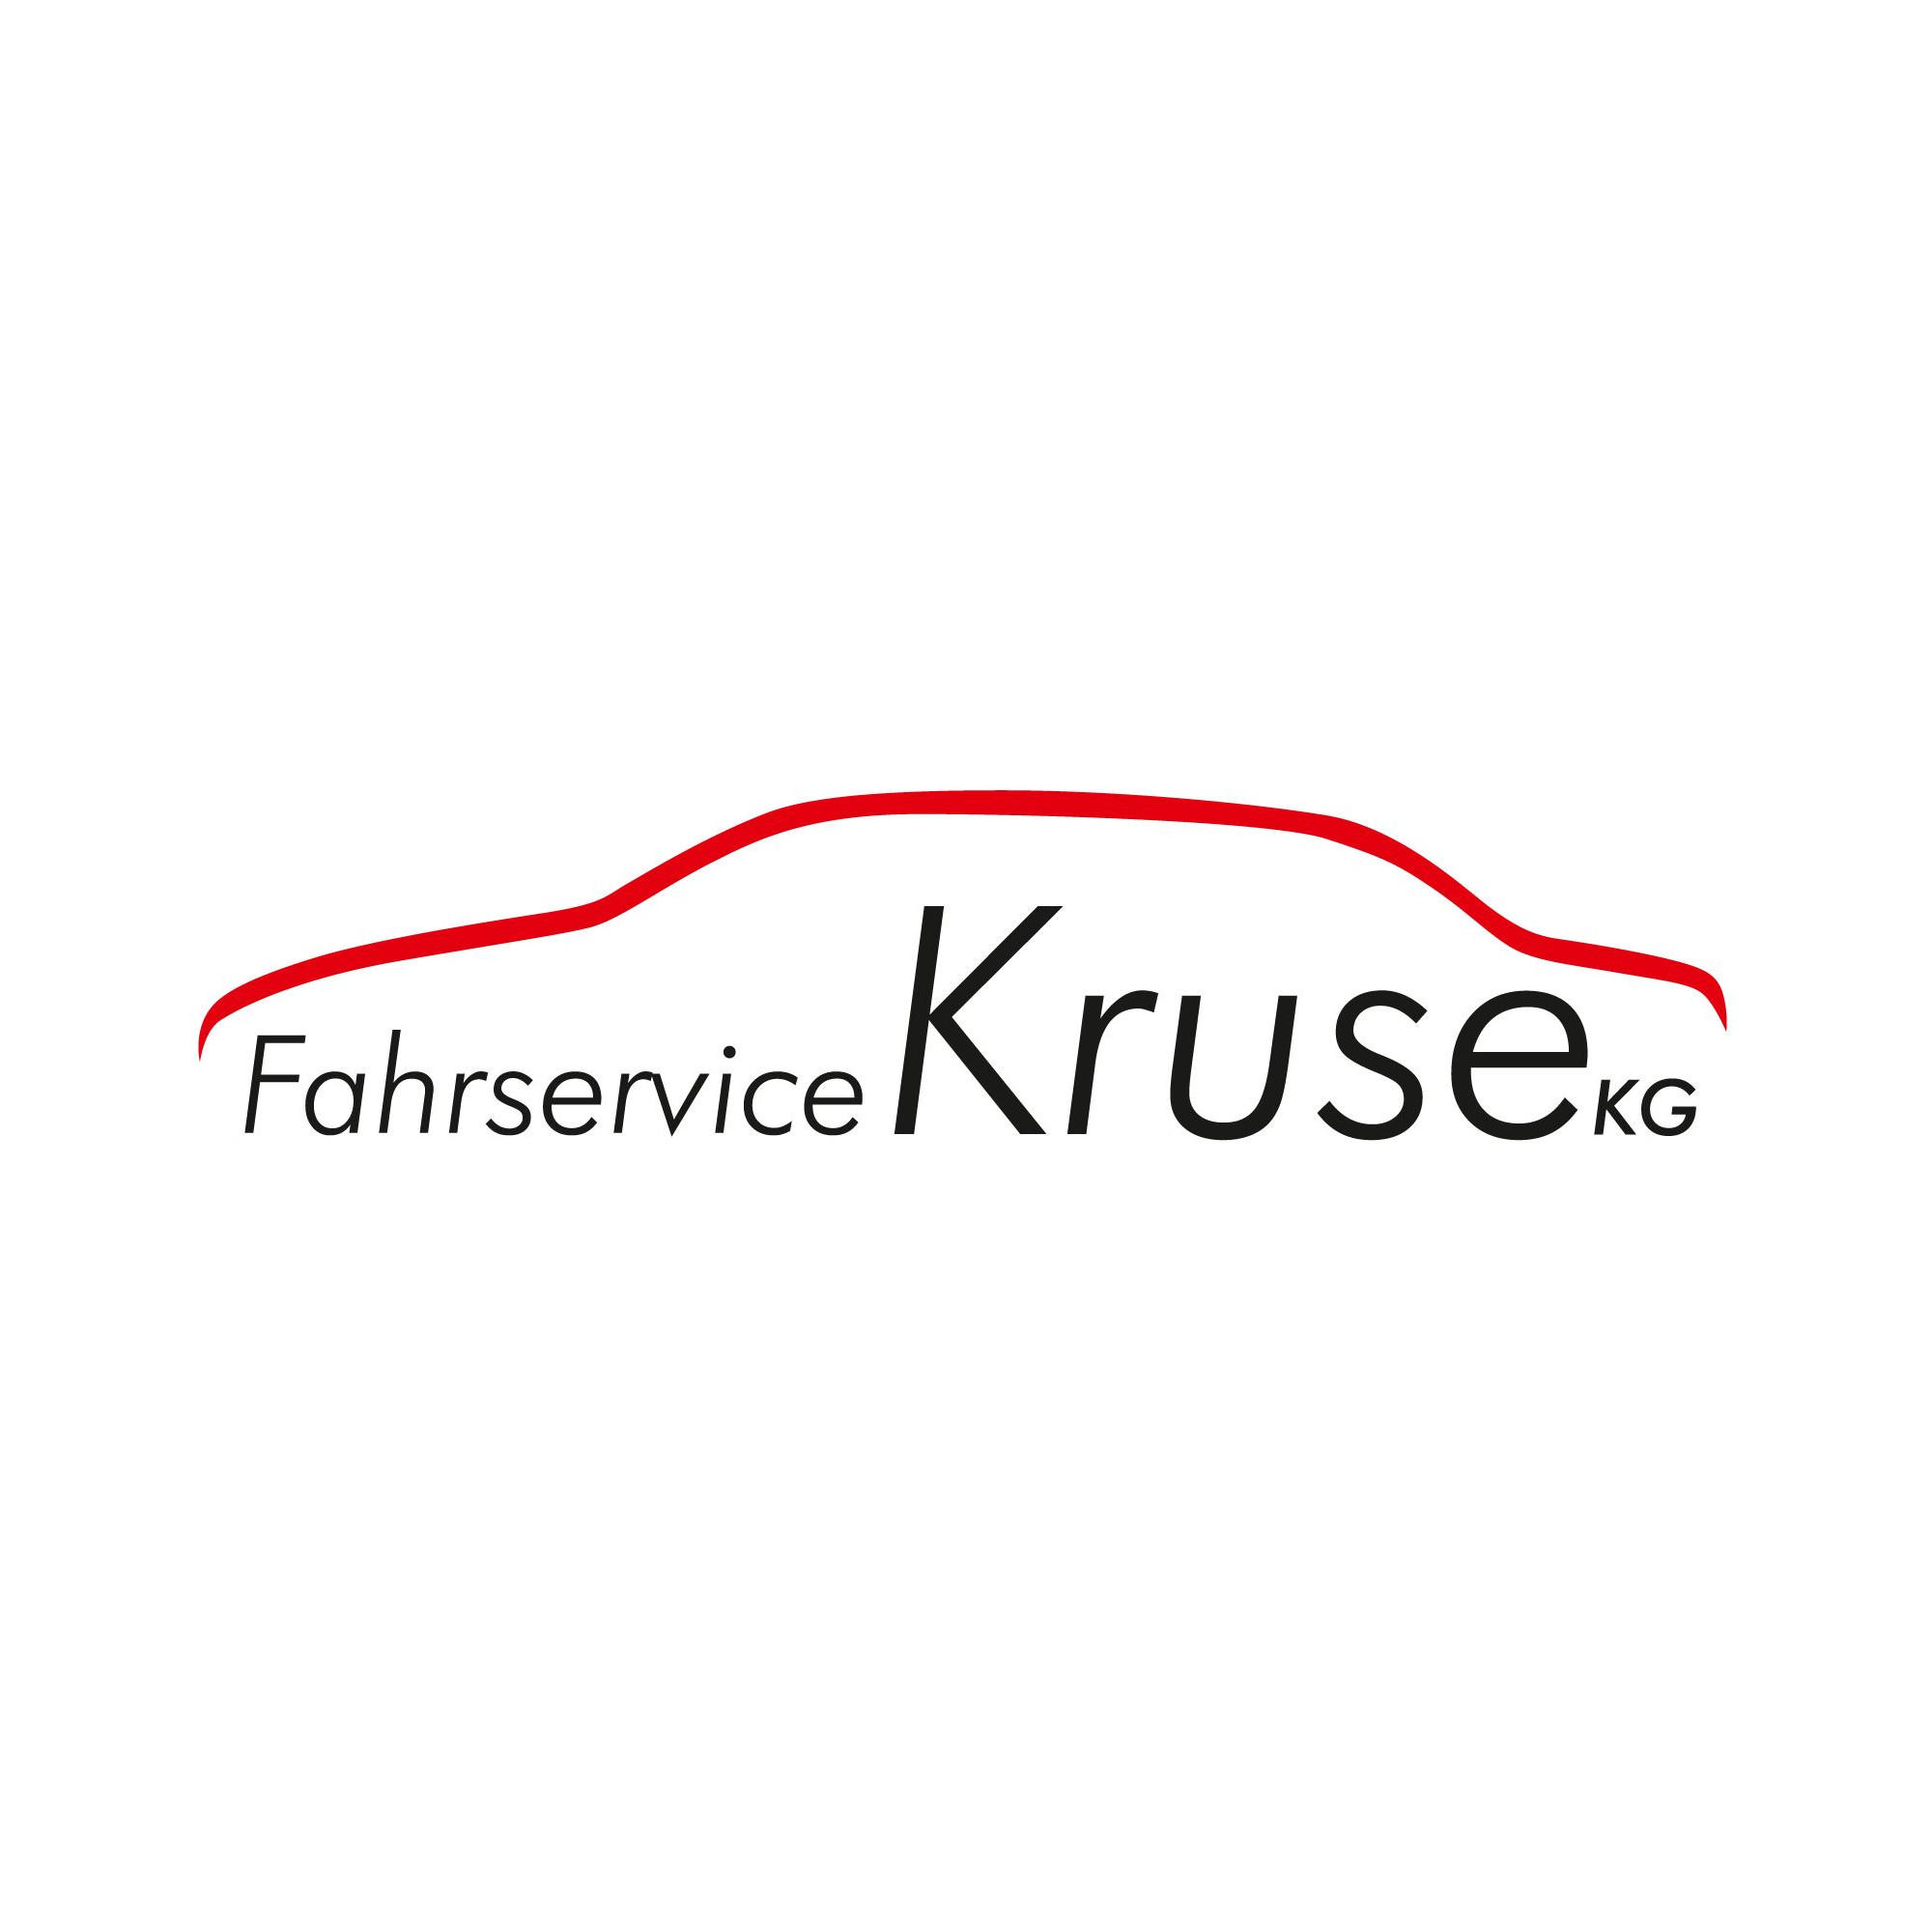 Fahrservice Kruse KG Logo